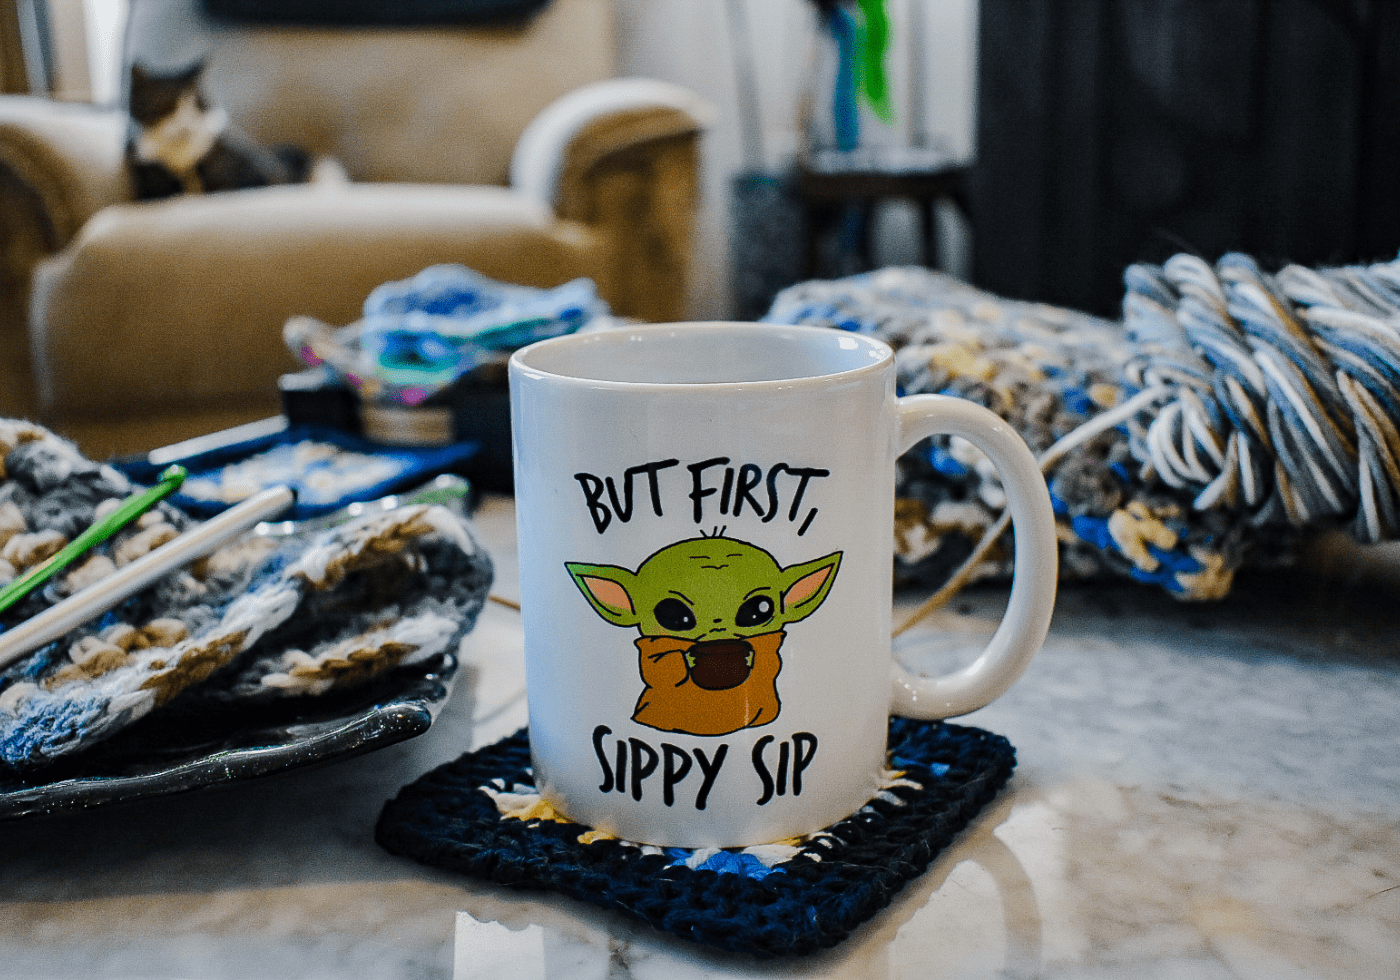 https://catsandcoffee.me/wp-content/uploads/2022/02/Star-Wars-Grogu-Baby-Yoda-Gifts-the-Best-Baby-Yoda-Merchandise.png